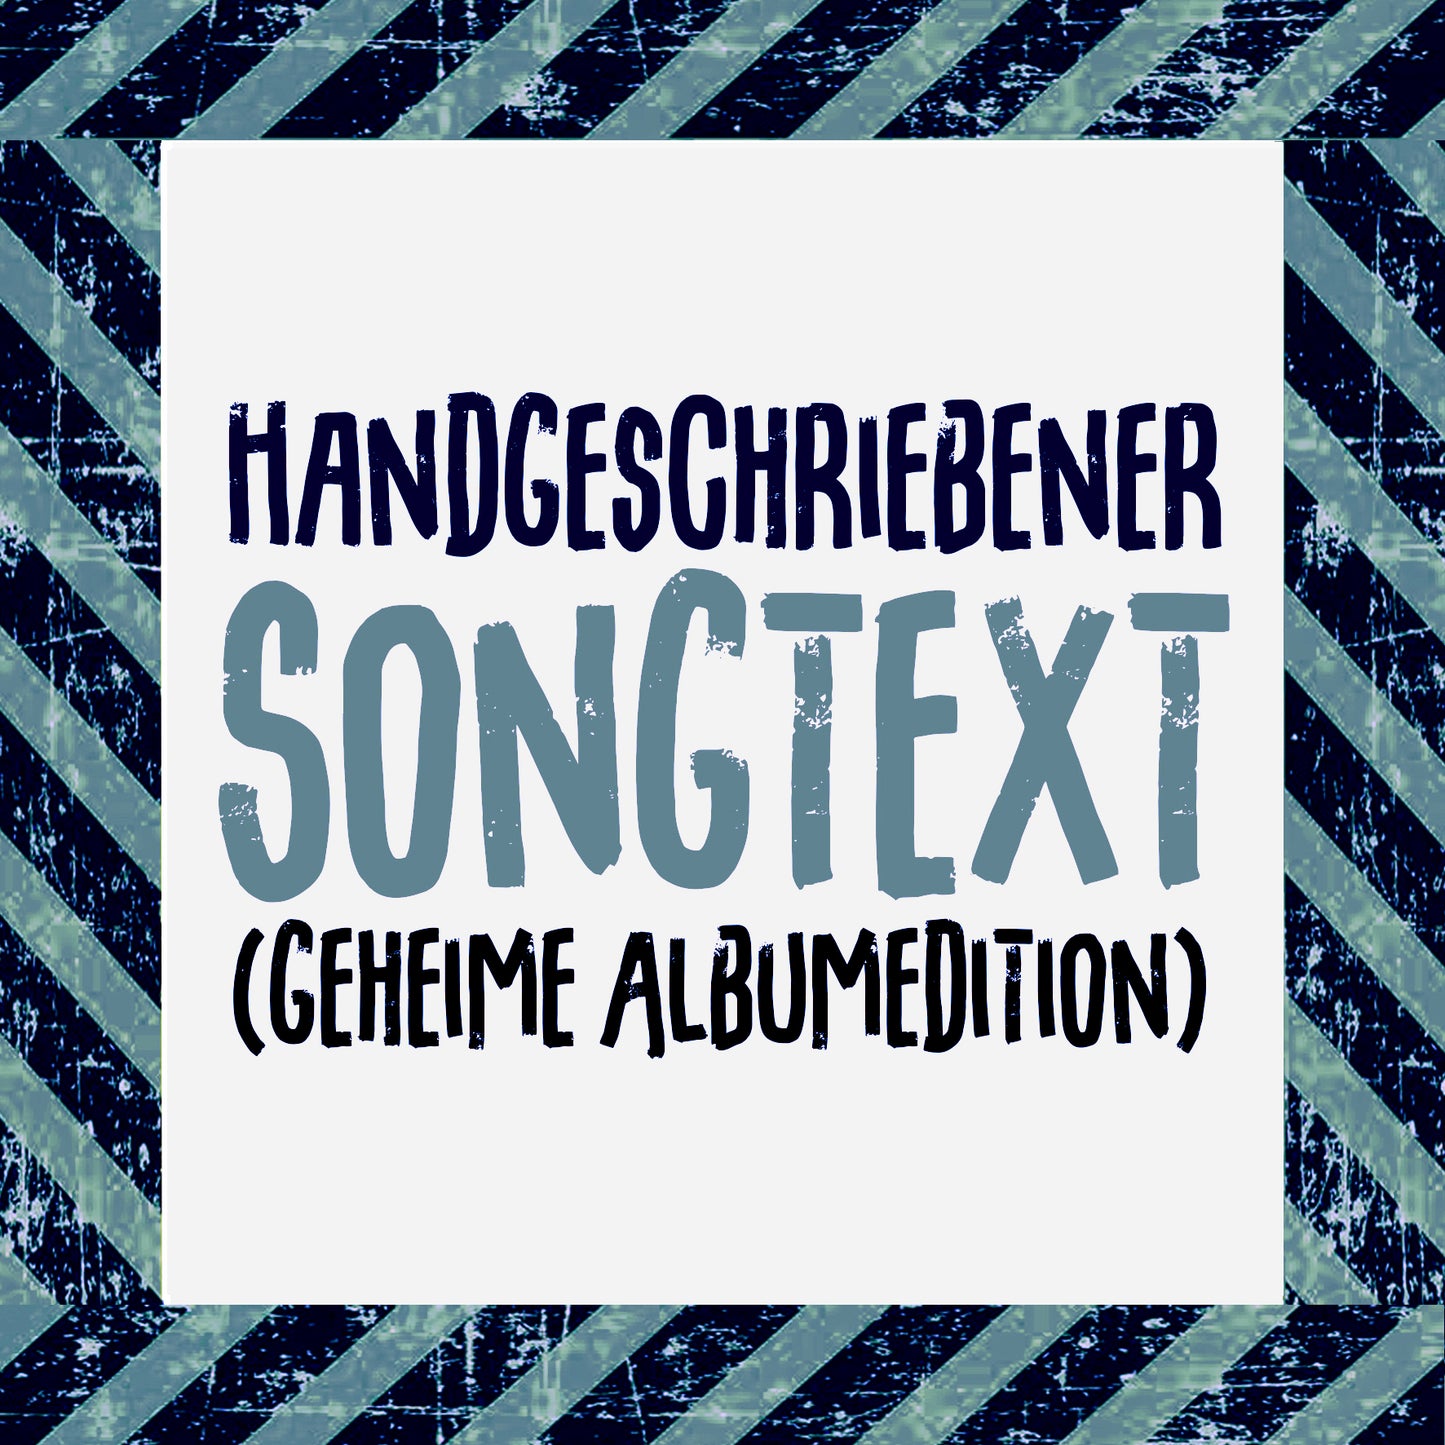 Handgeschriebener Songtext "Album 9 Edition"